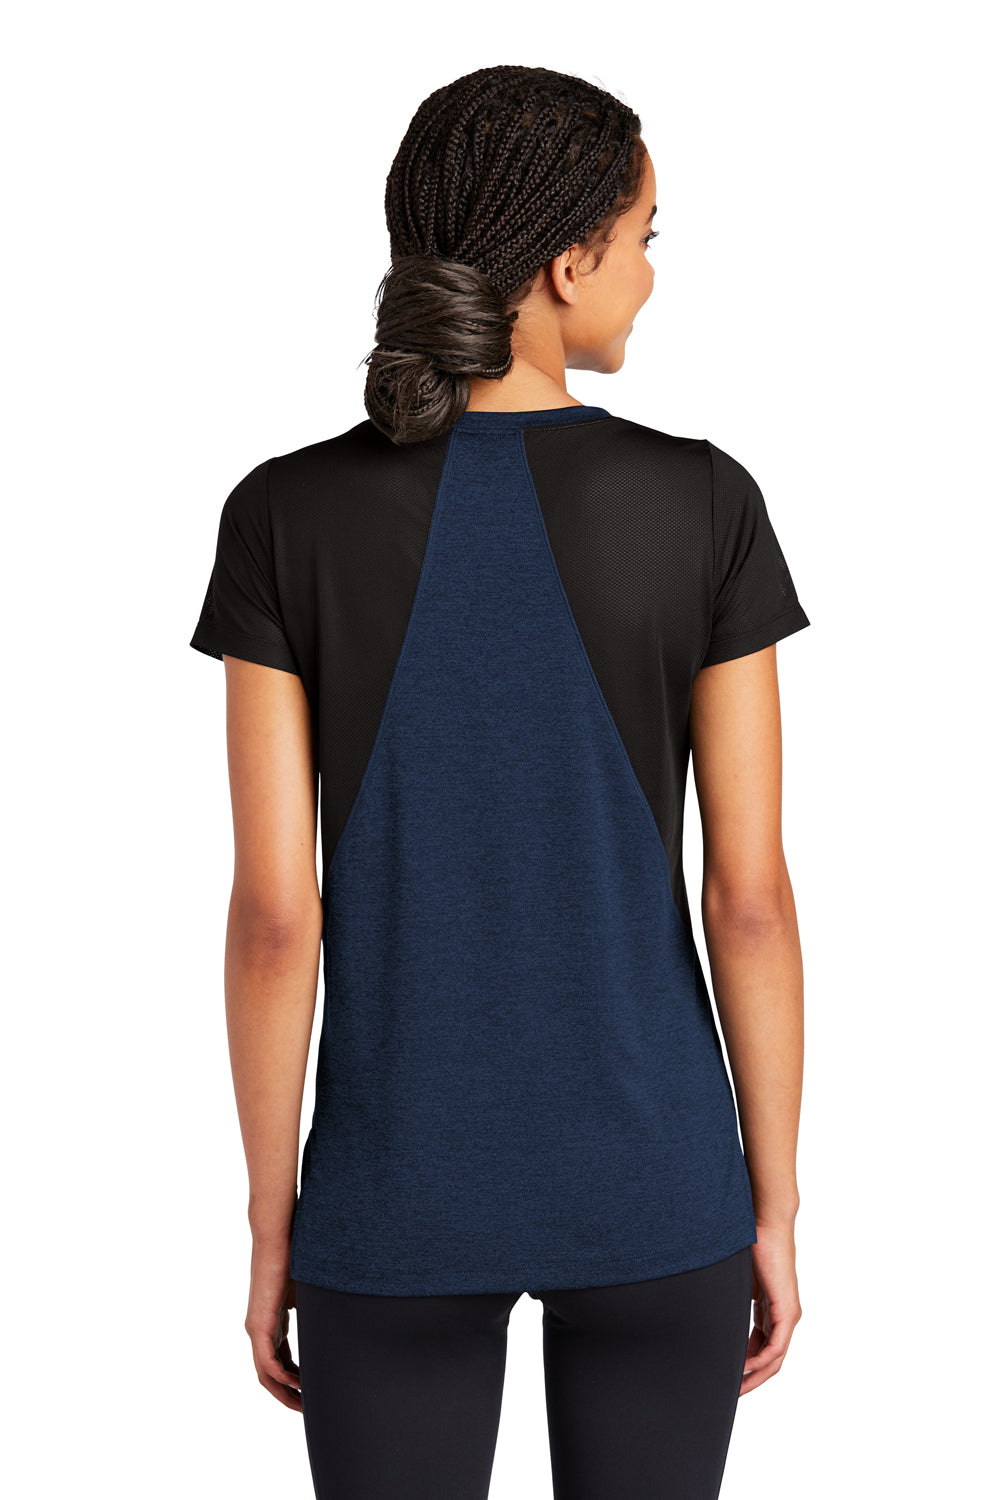 Sport-Tek Womens Endeavor Short Sleeve V-Neck T-Shirt Heather Dark Royal Blue/Black Side